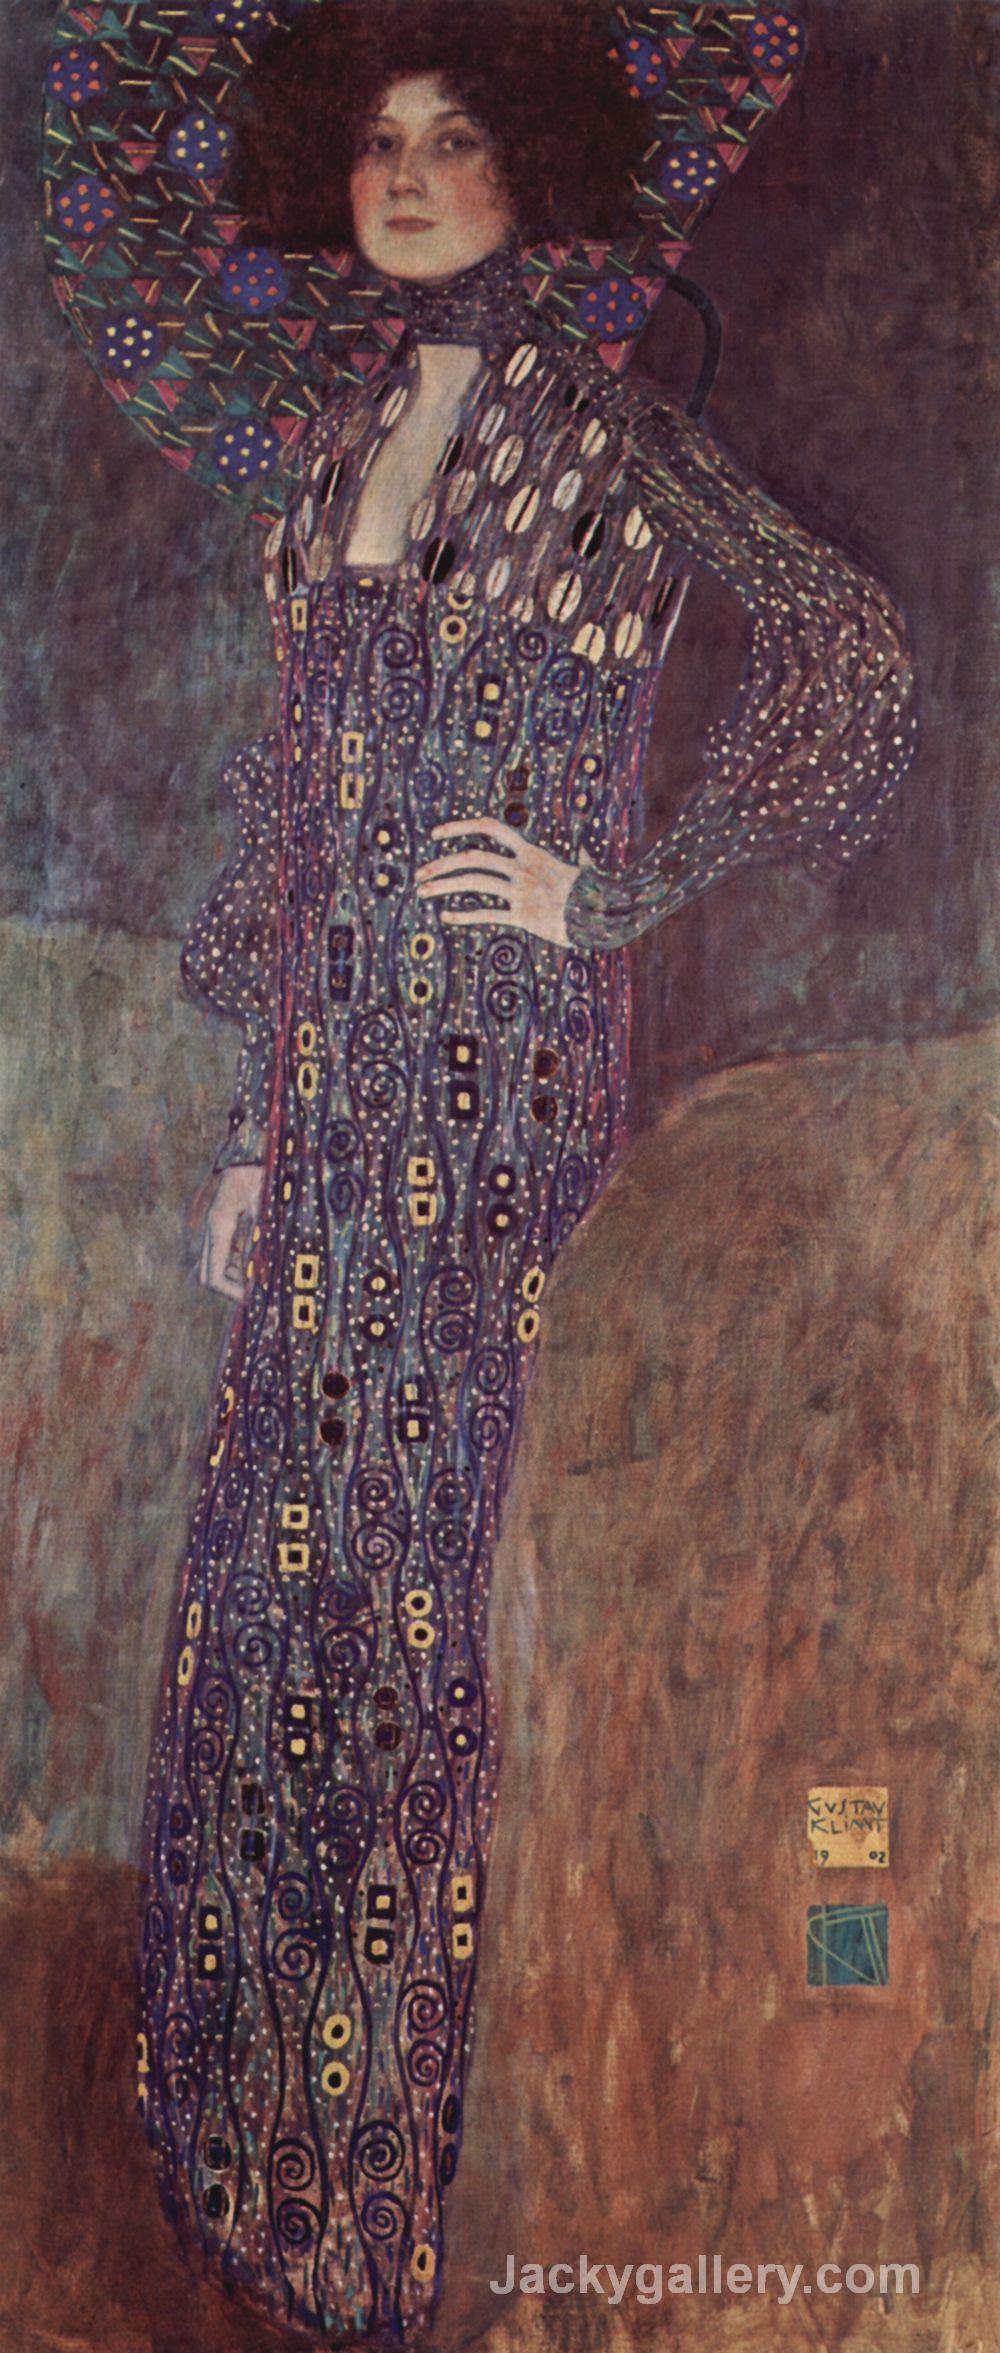 Portrait Of Emilie Floge, by Gustav Klimt paintings reproduction